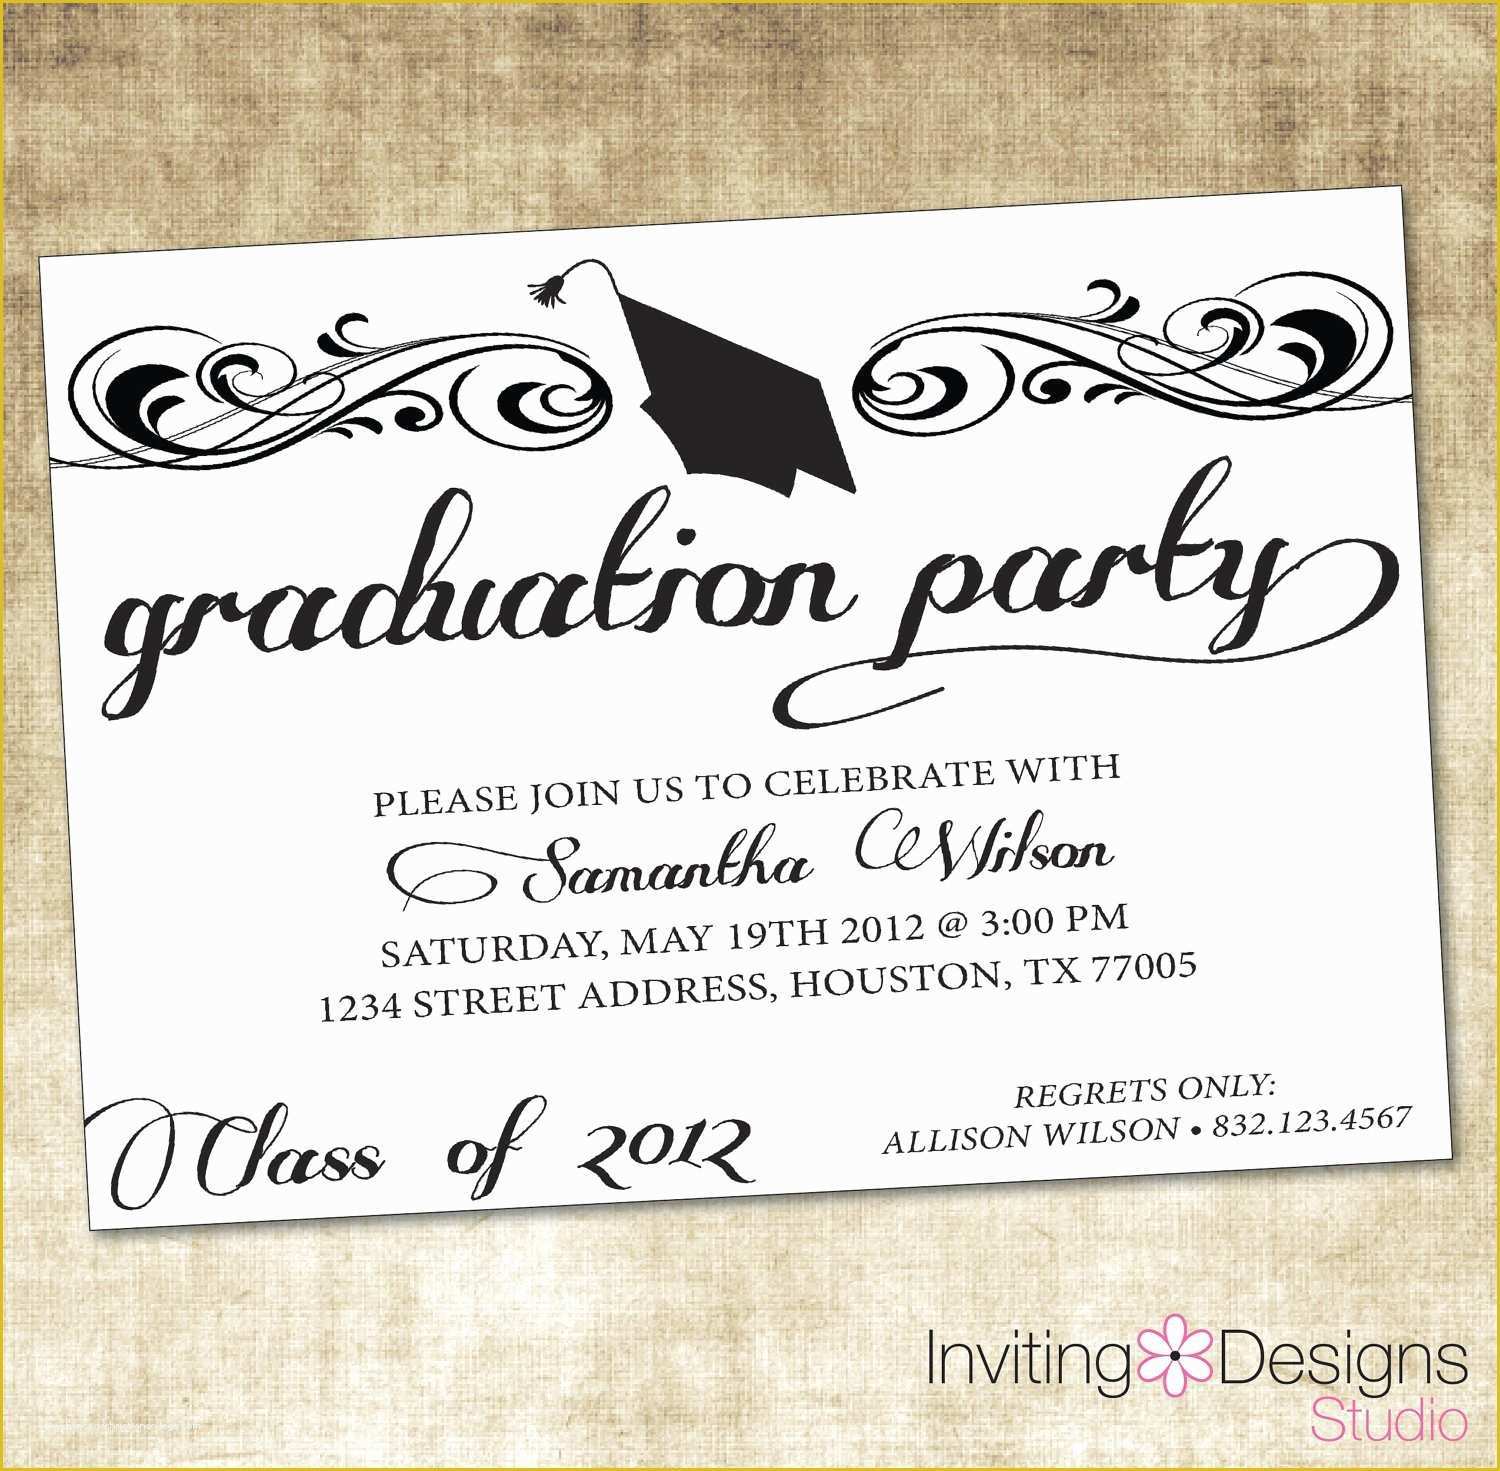 Graduation Party Invitation Postcard Templates Free Of Free Graduation Invitation Templates Free Graduation